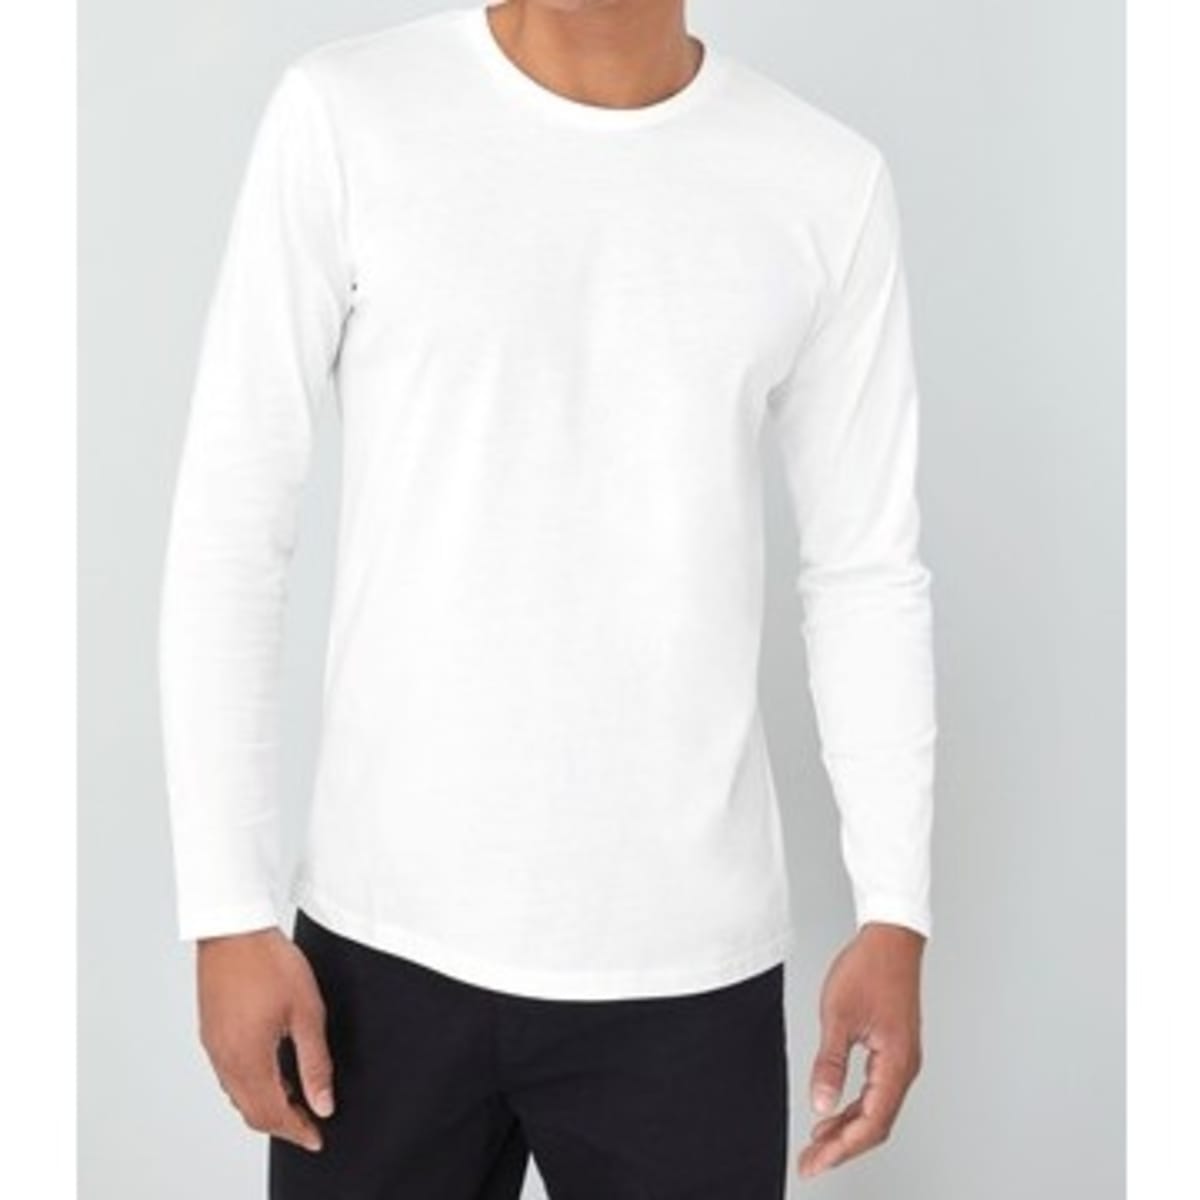 S & Co Men's Stylish Long Sleeve T-shirt - White